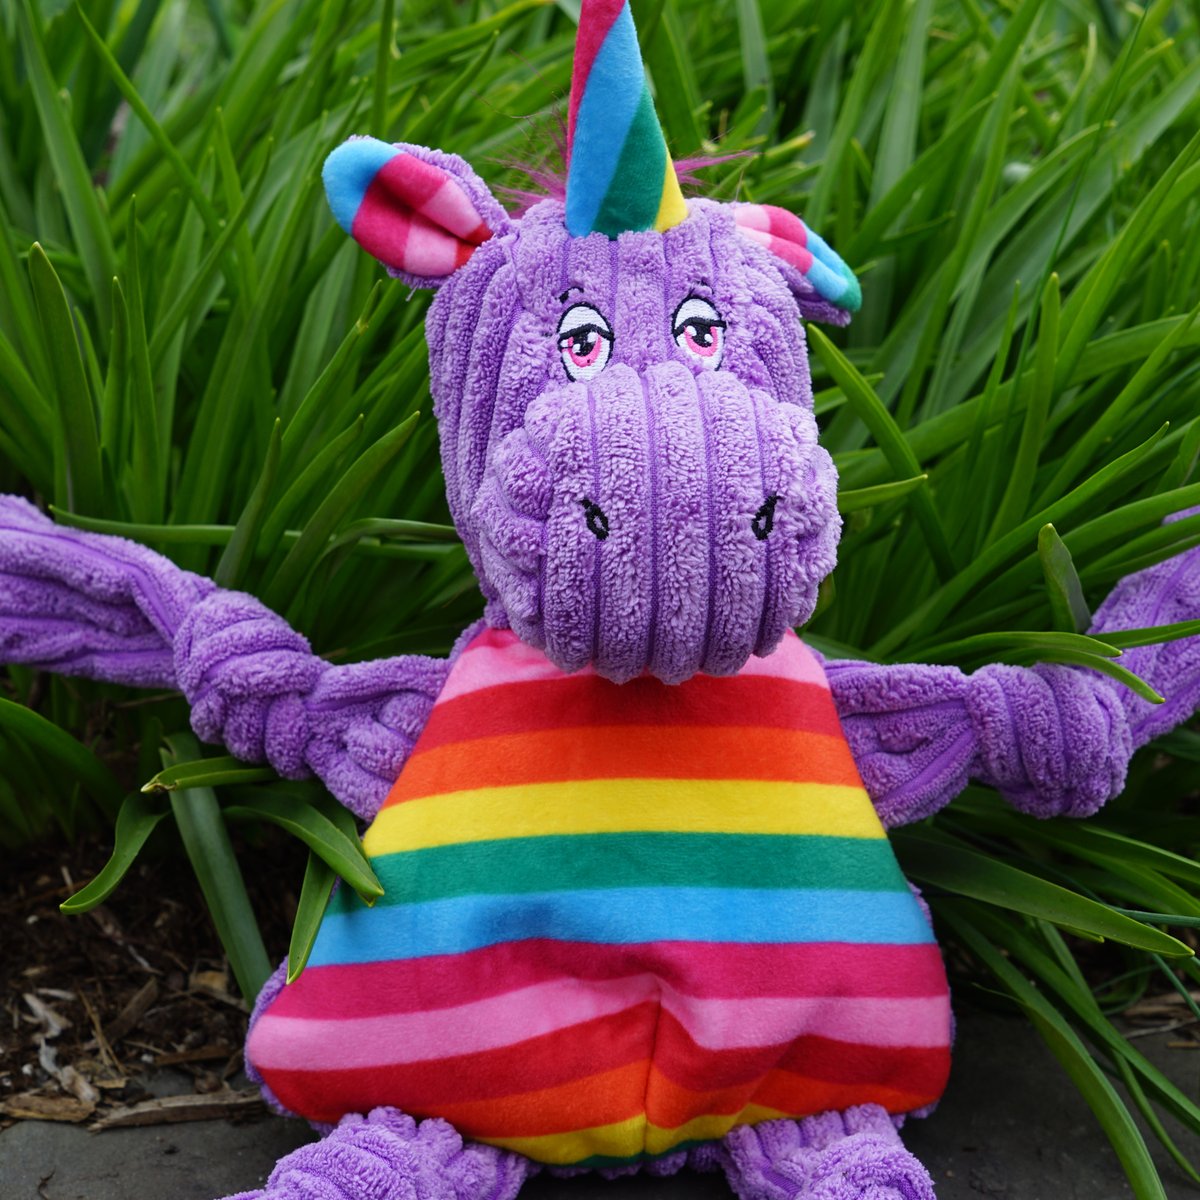 HuggleHounds Knottie Rainbow Durable Squeaky Plush Dog Toy, Unicorn